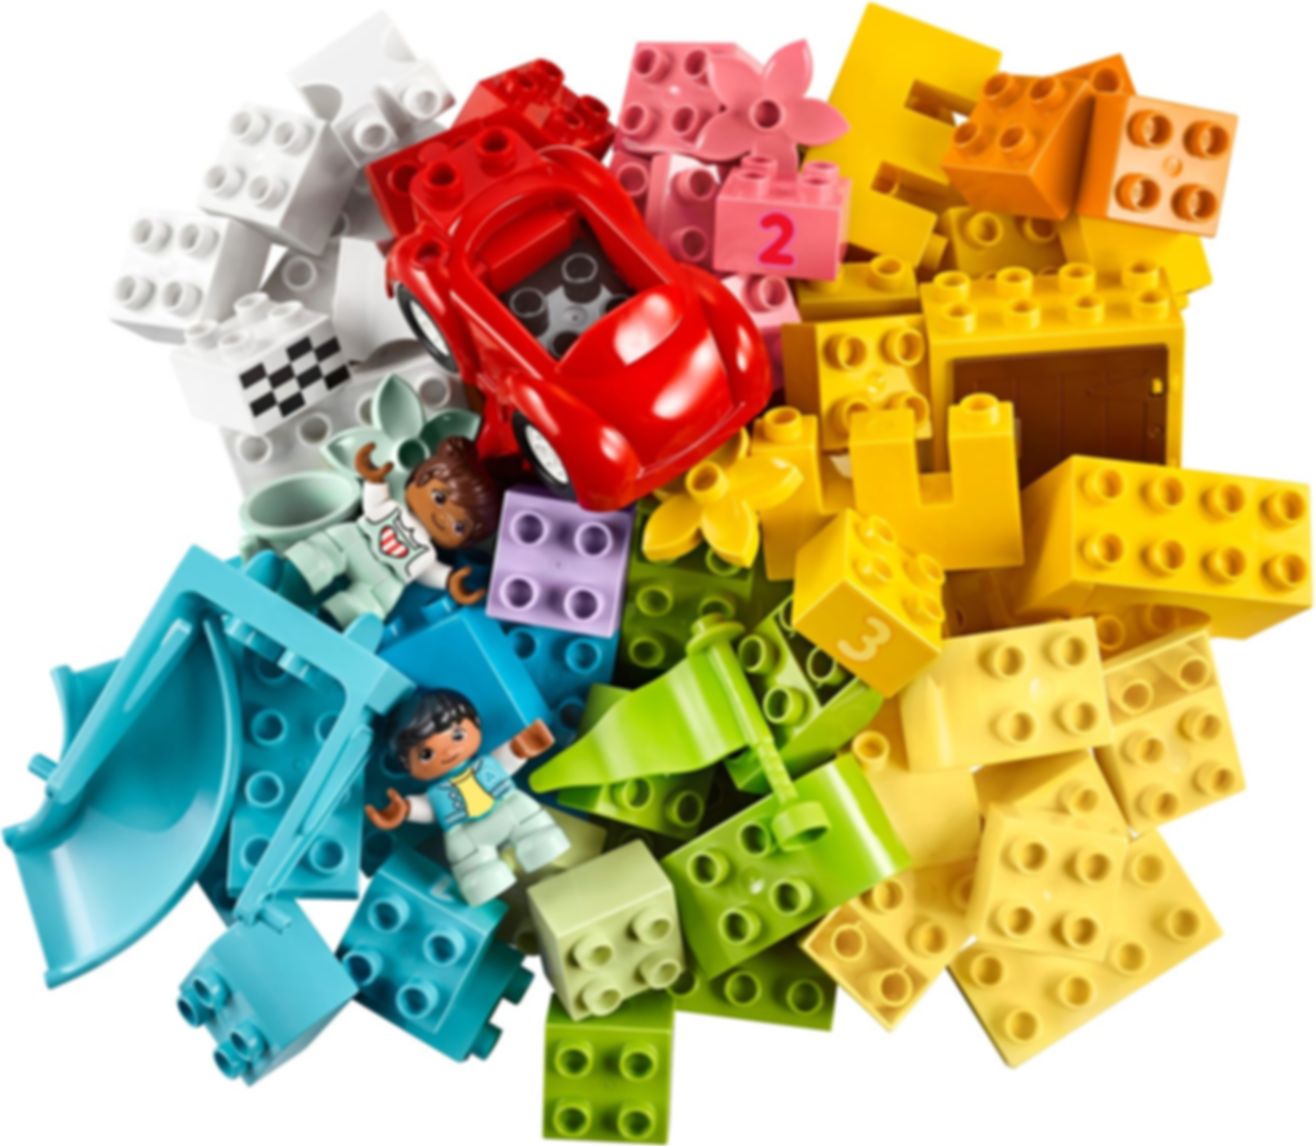 LEGO® DUPLO® Deluxe Brick Box components